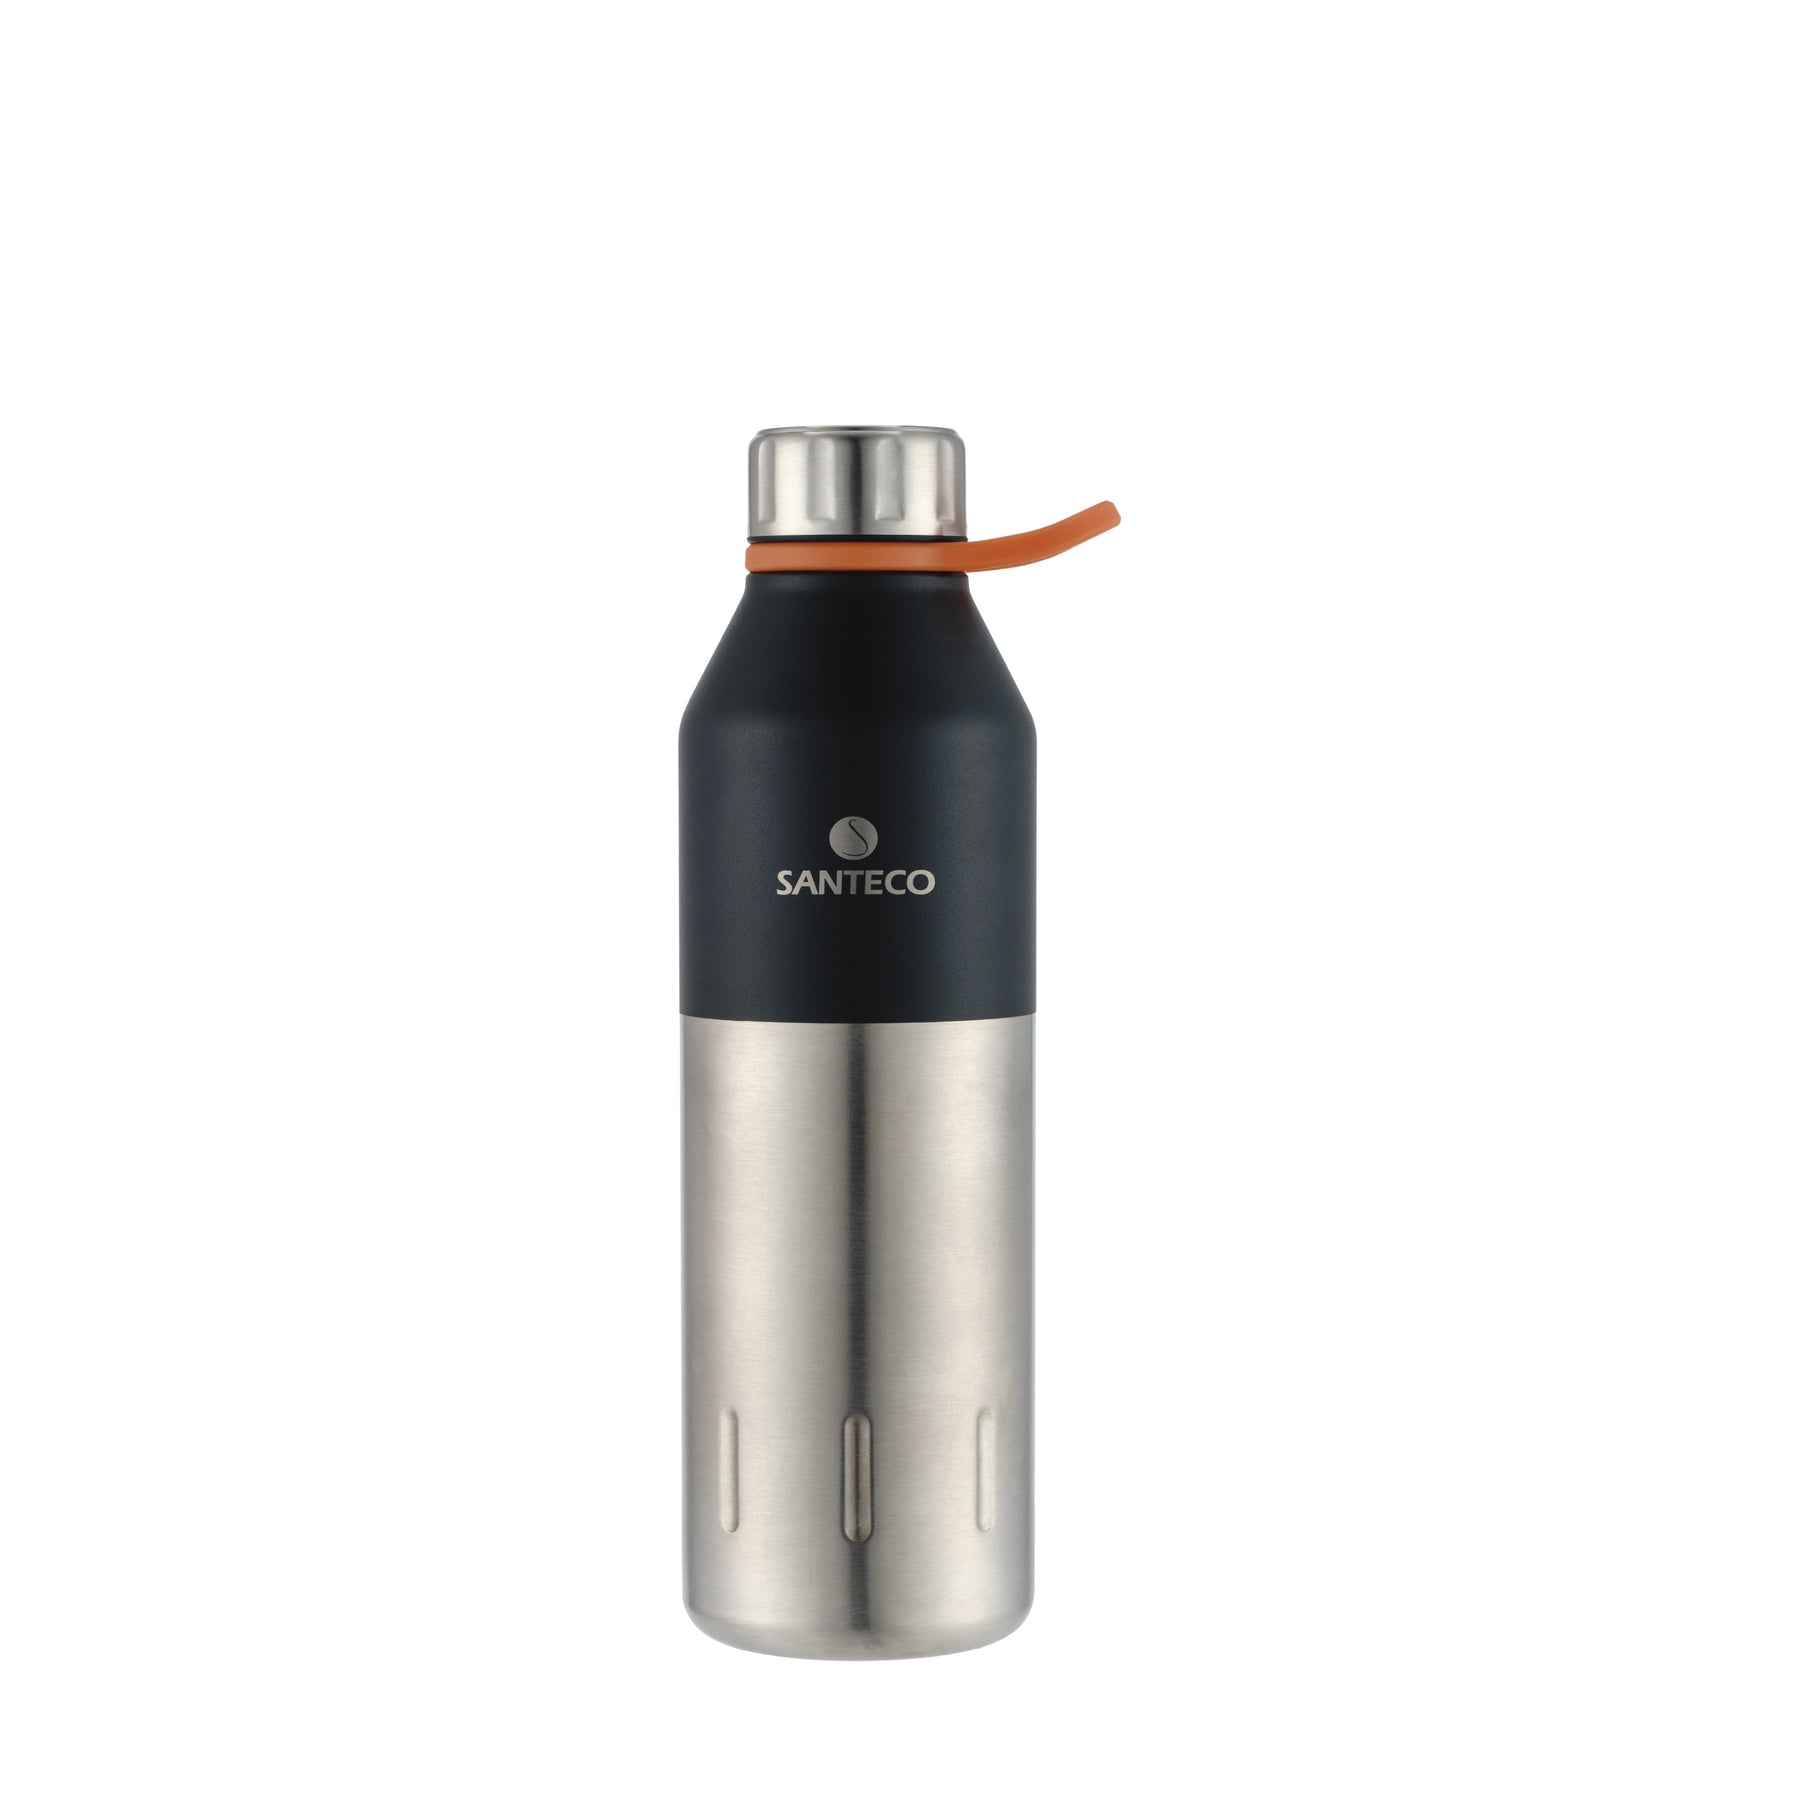 SANTECO Kola Beverage Bottle, 17 oz, Stainless Steel, Vacuum Insulated